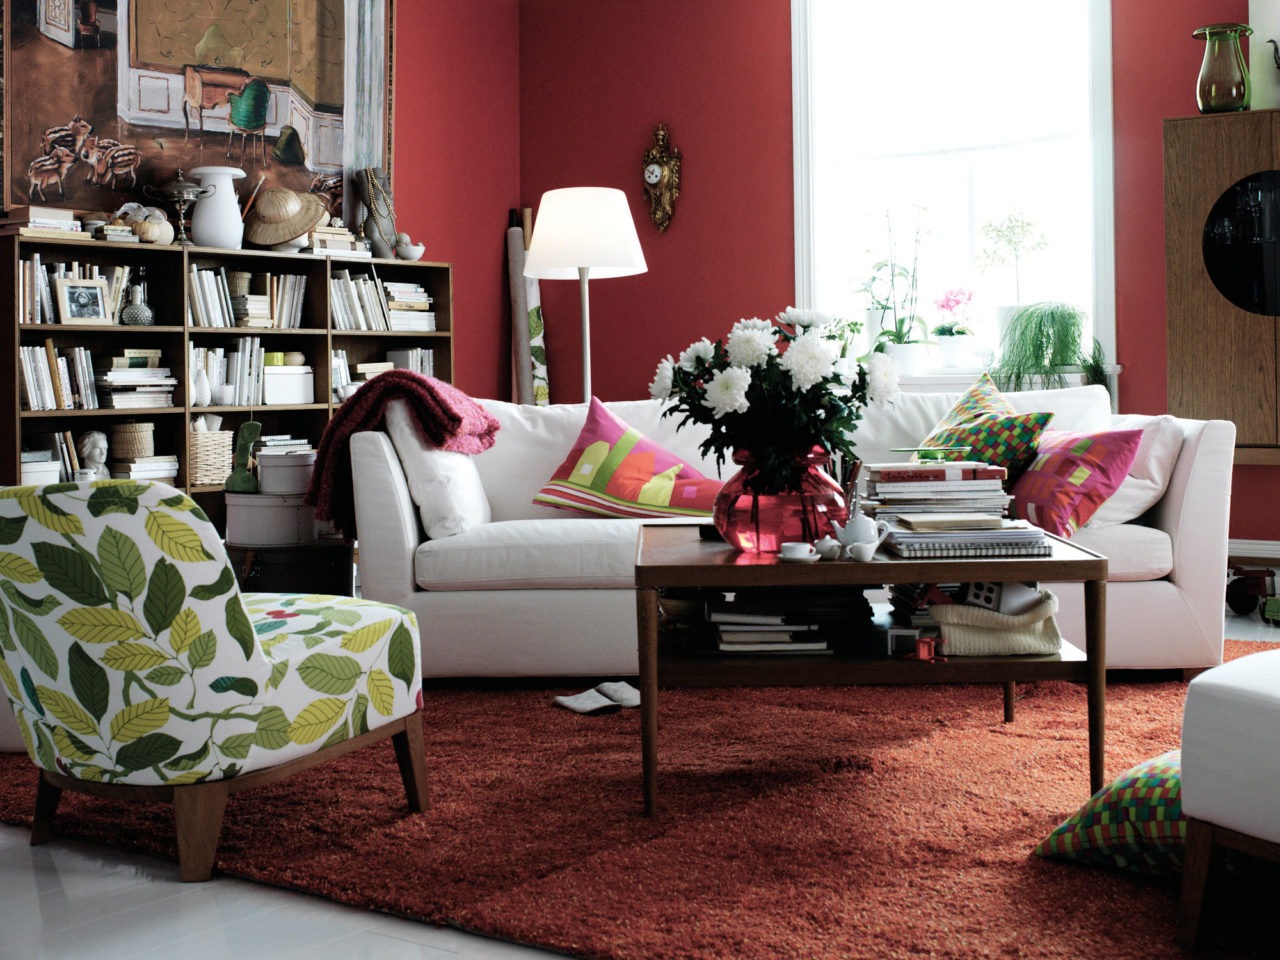 Living room with seating area, bookshelf, orange rug and burgundy walls.